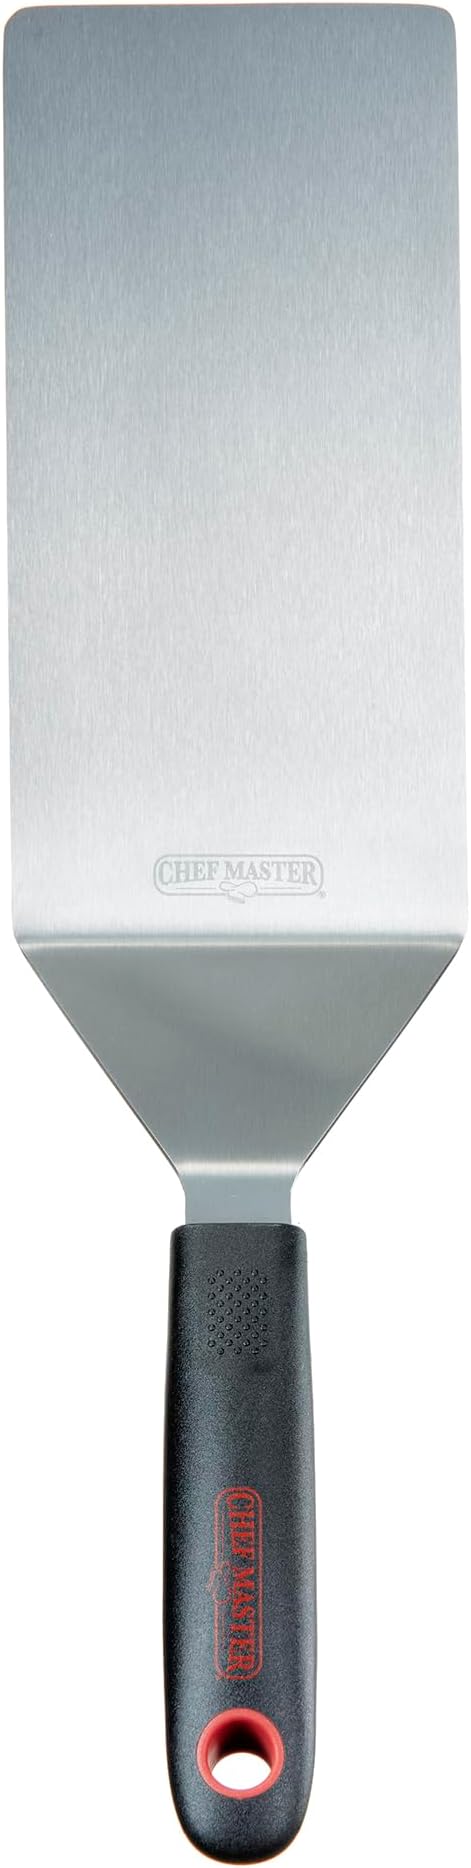 Chef Master 90280 Stainless Steel High Heat Turner 8" x 4"